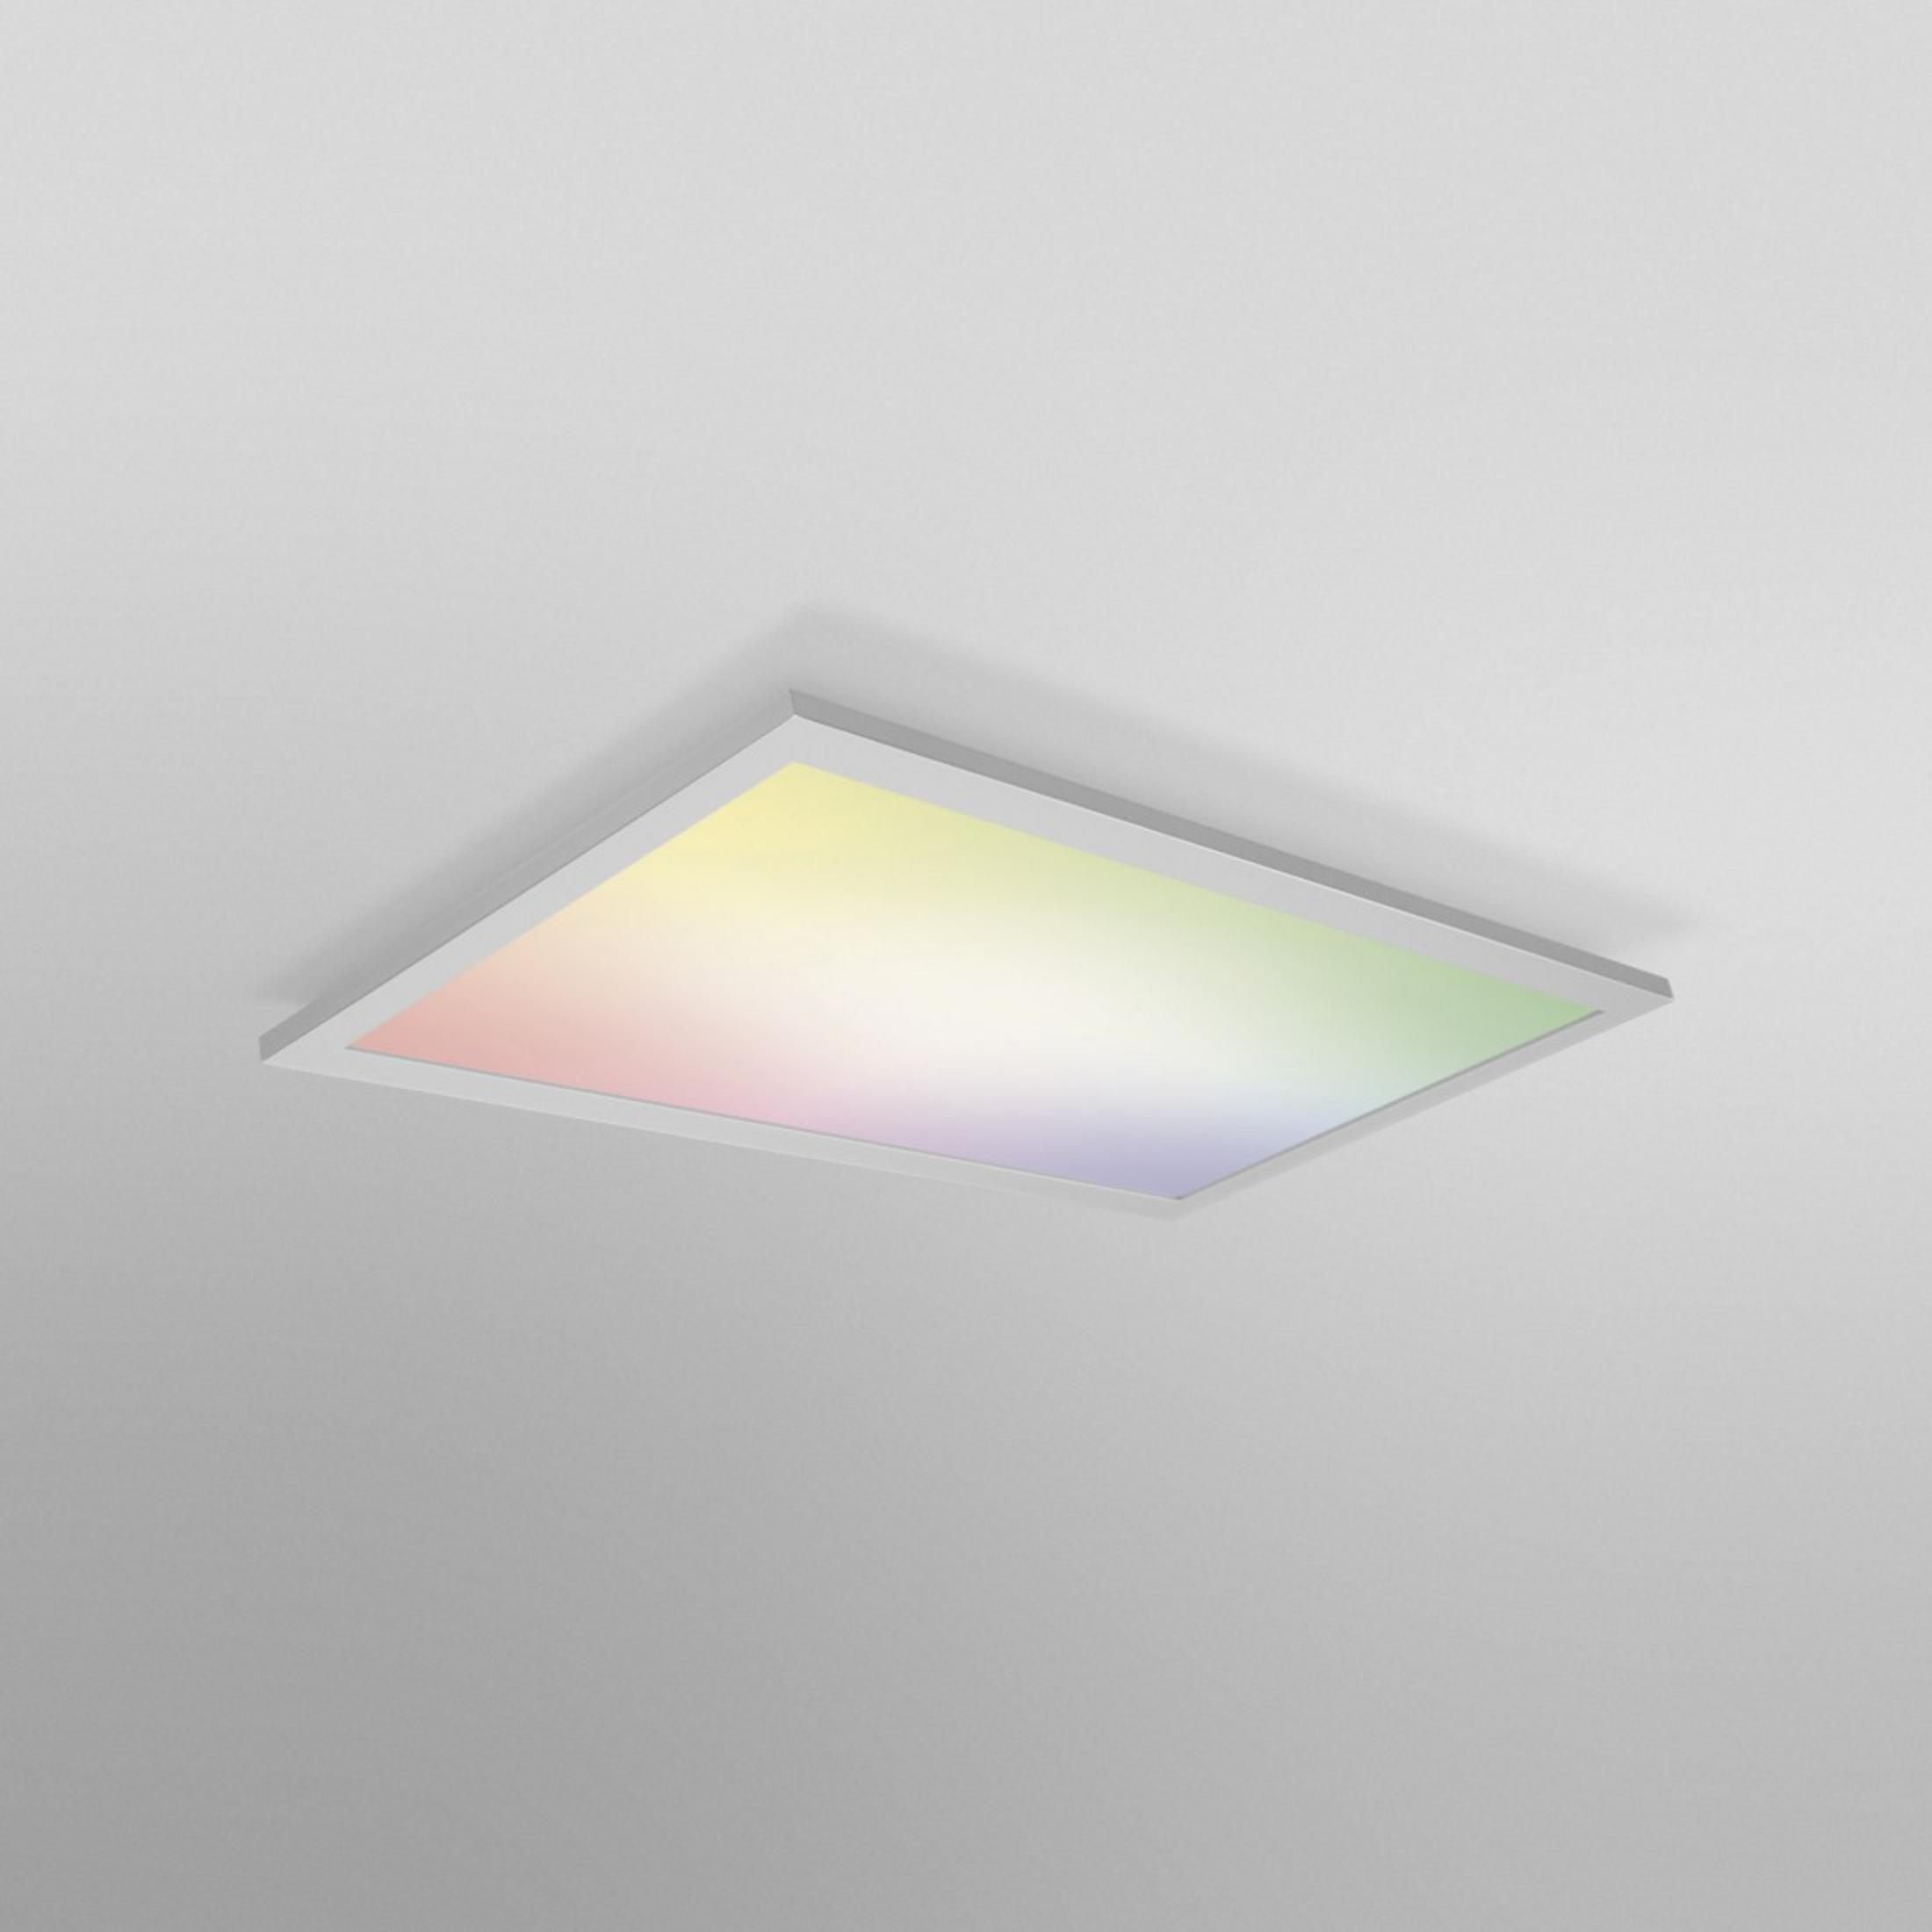 PLUS WIFI RGBW LEDVANCE Panelleuchte SMART + PLANON 600X300